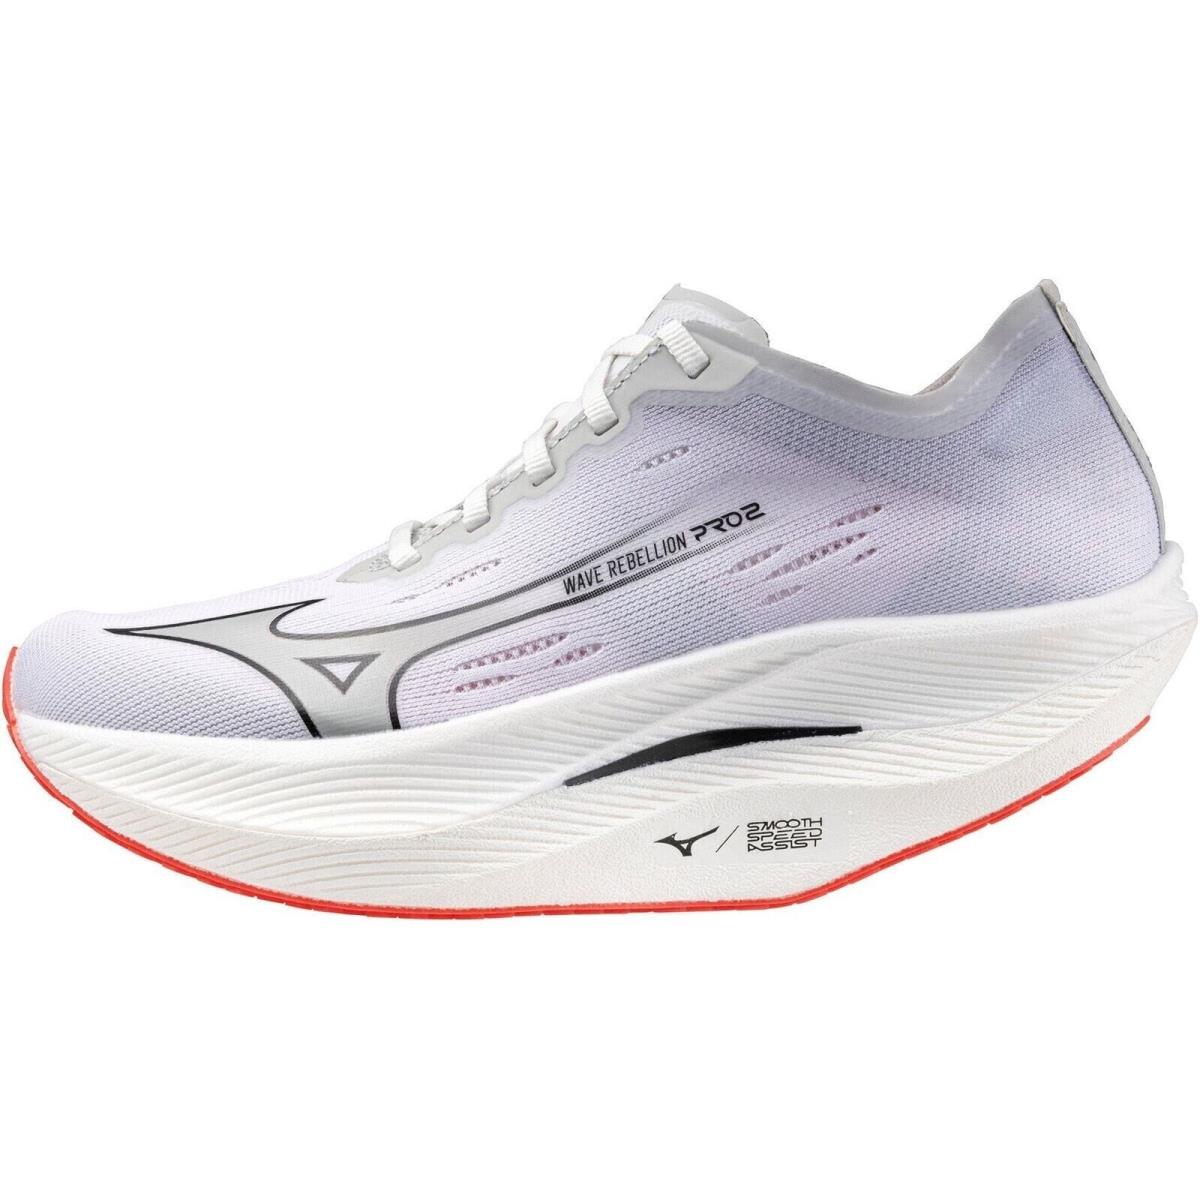 Mizuno Wave Rebellion Pro 2 Carbon Plated Running Shoes Women Sz 11 / Men Sz 9 - Exterior: